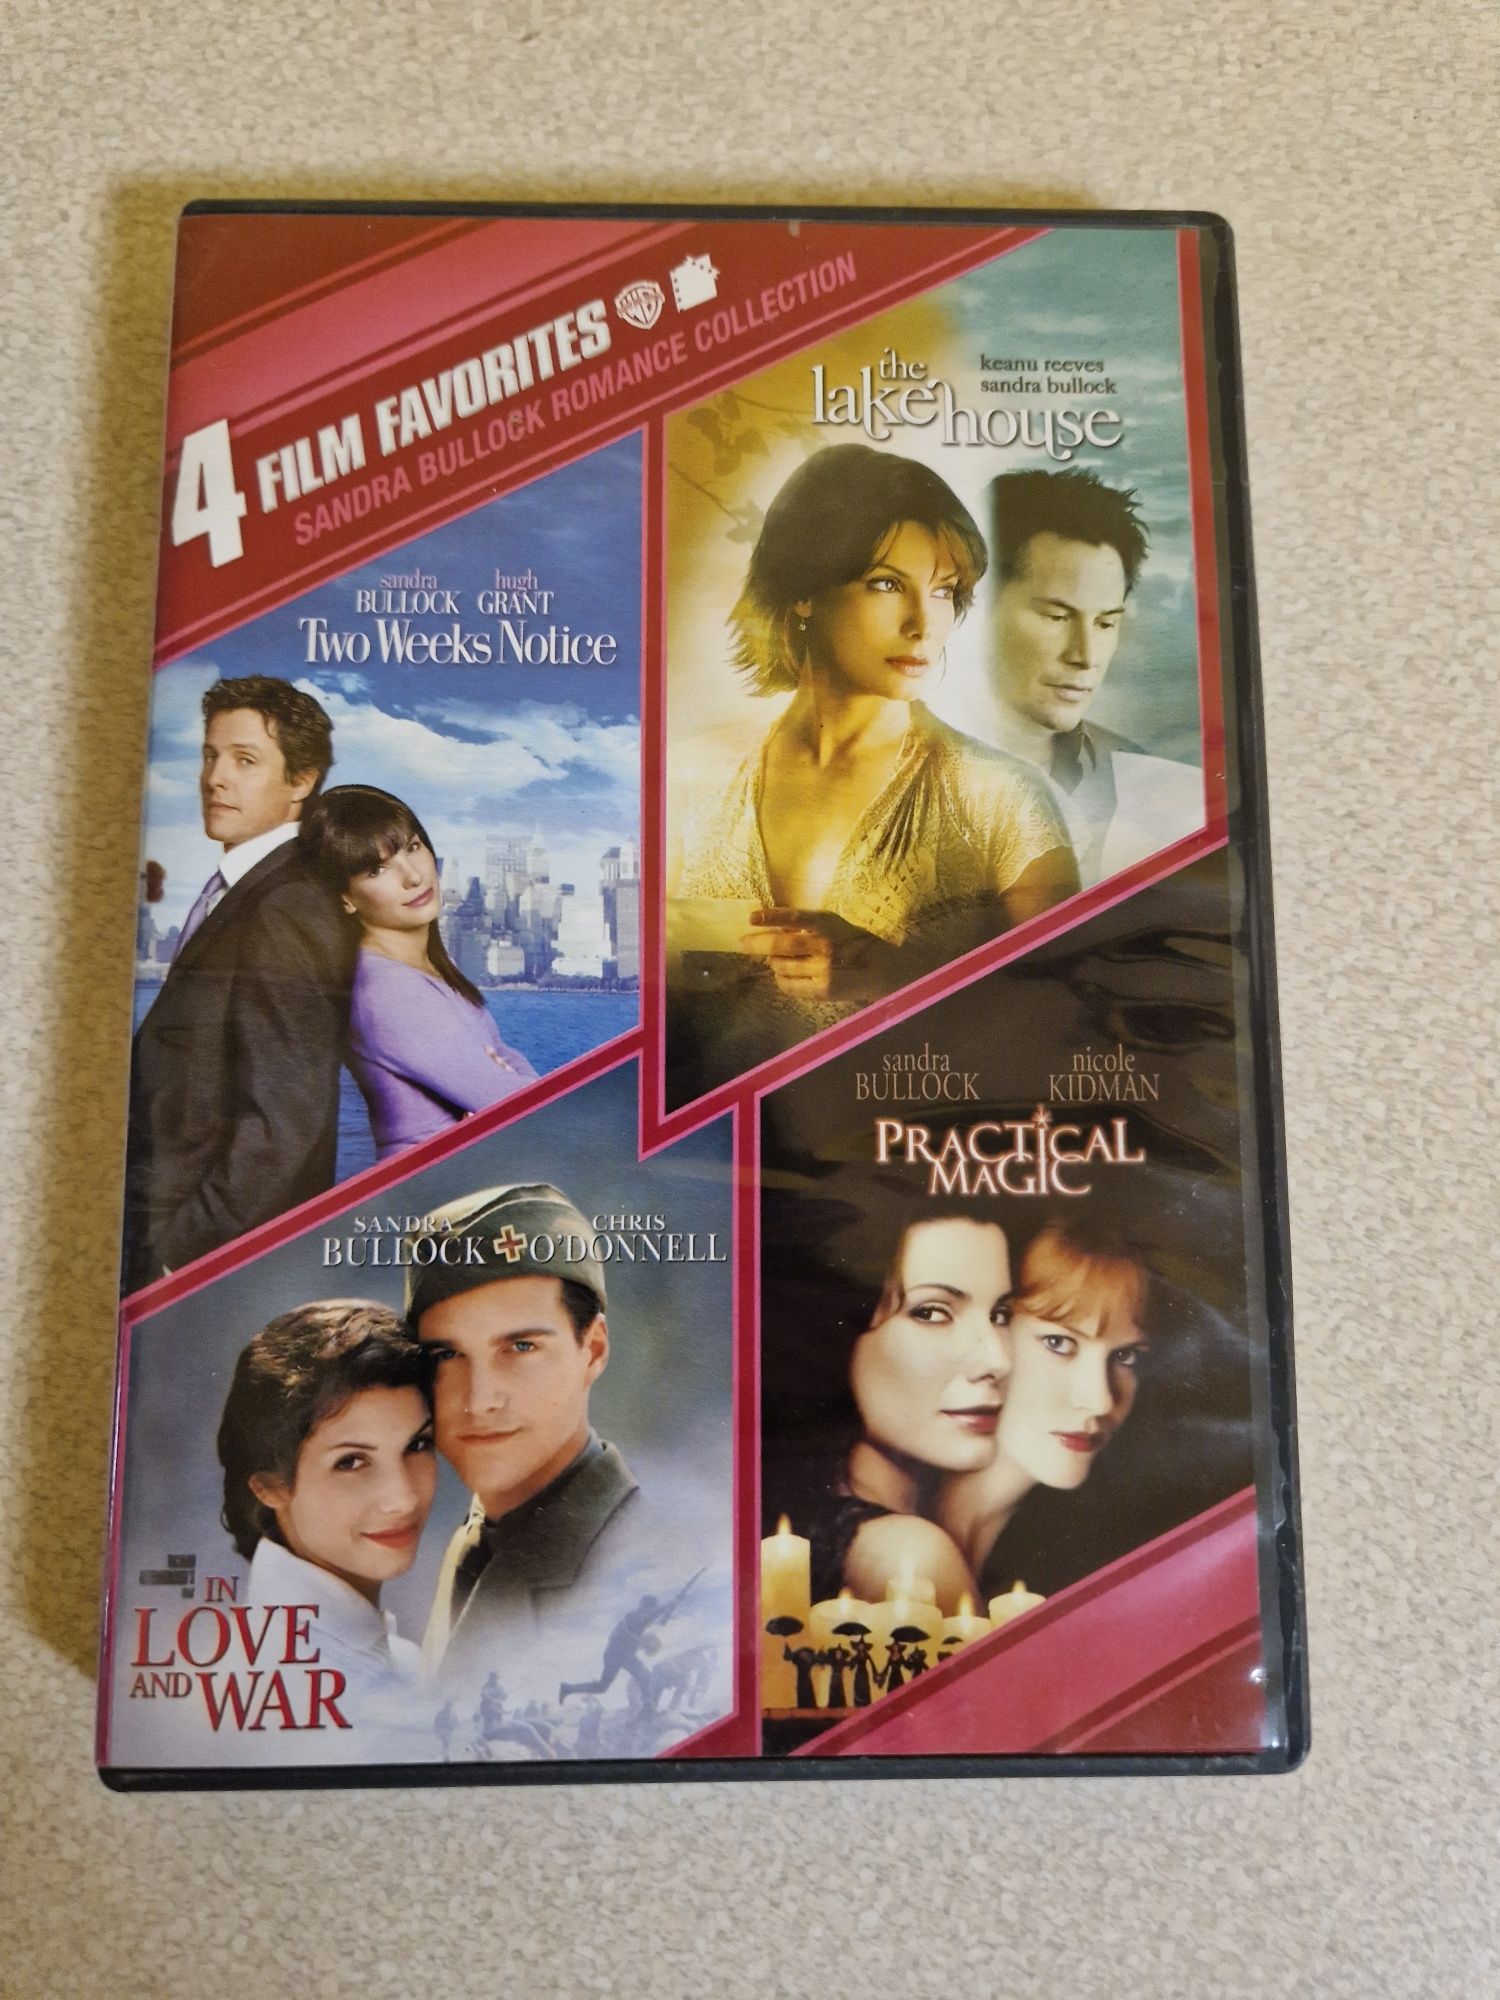 Sandra Bullock romance collection. 4 filmy na 2 cd.